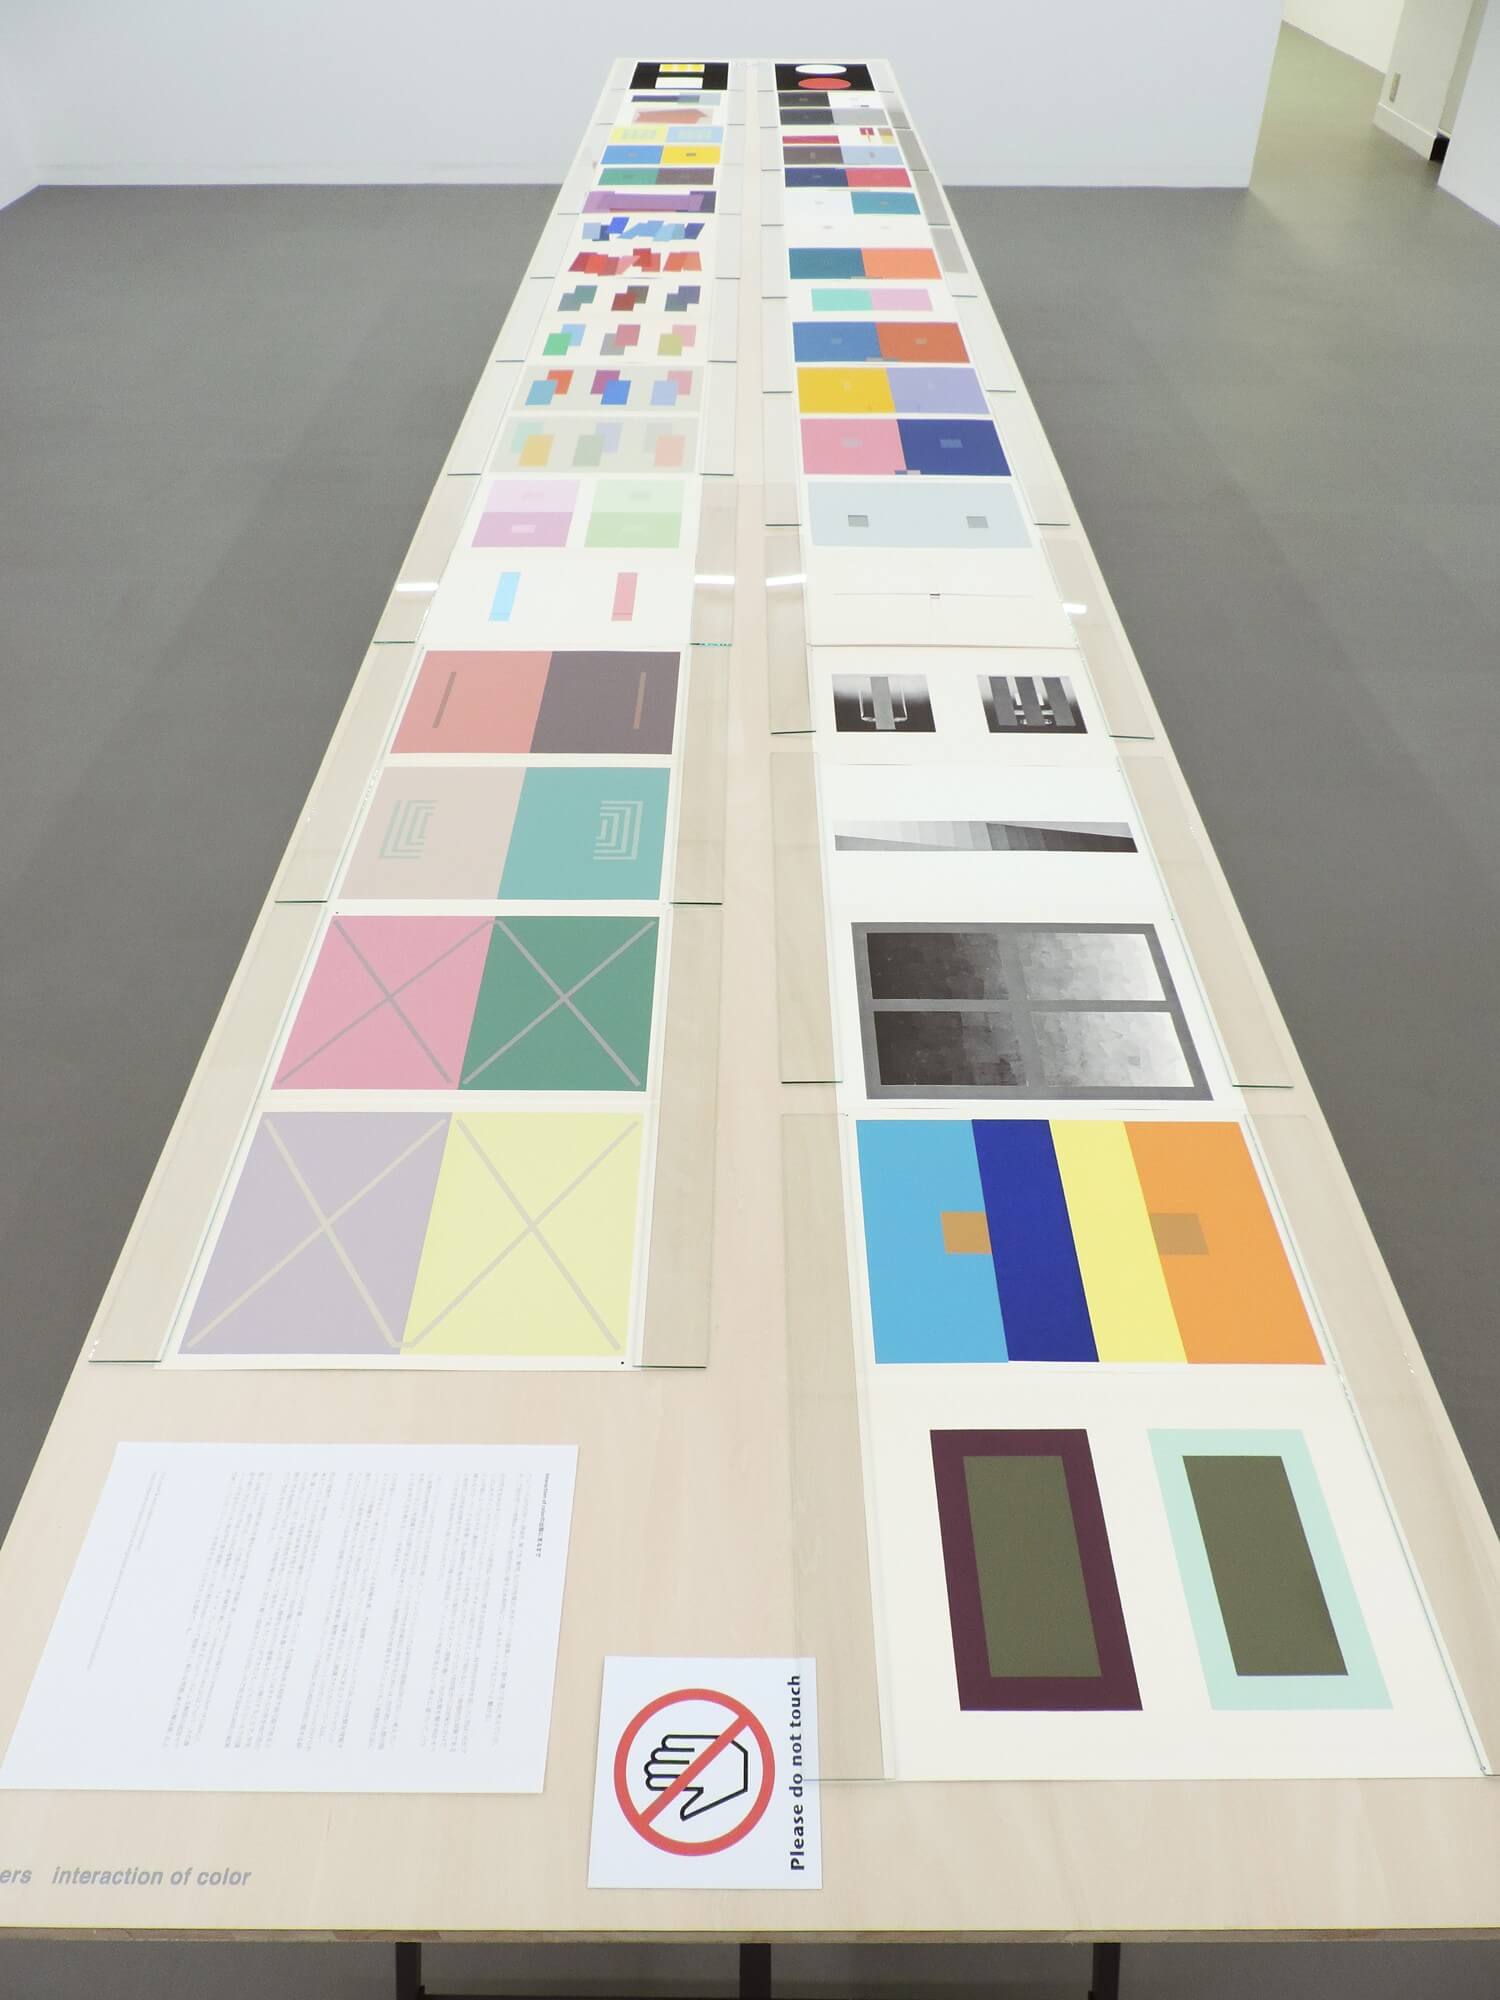 Josef Albers<br>interaction of color80 / silkscreens, 33 x 25.5 cm, 1963ケースサイズ, 37 x 28 x 14.5 cm